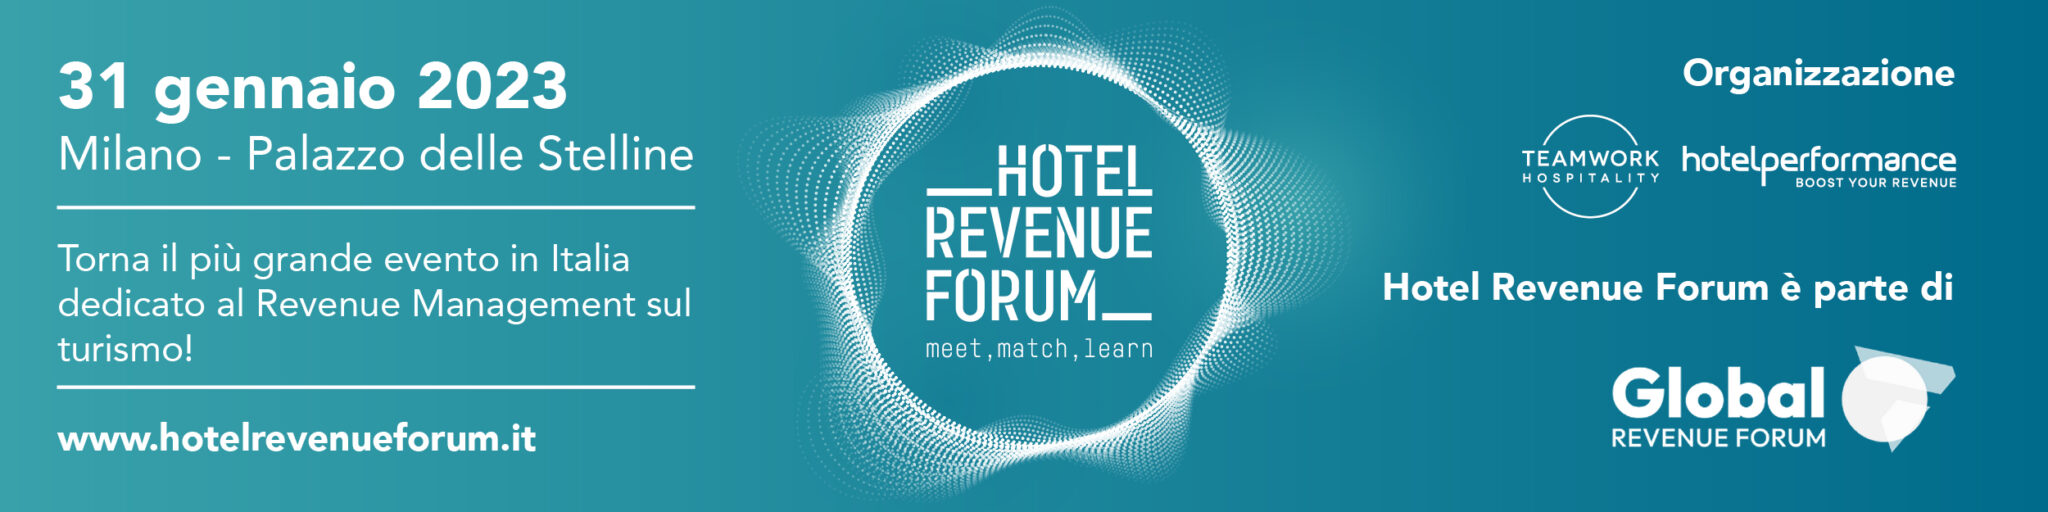 Hotel Revenue Forum, Milano 31 gennaio 2023